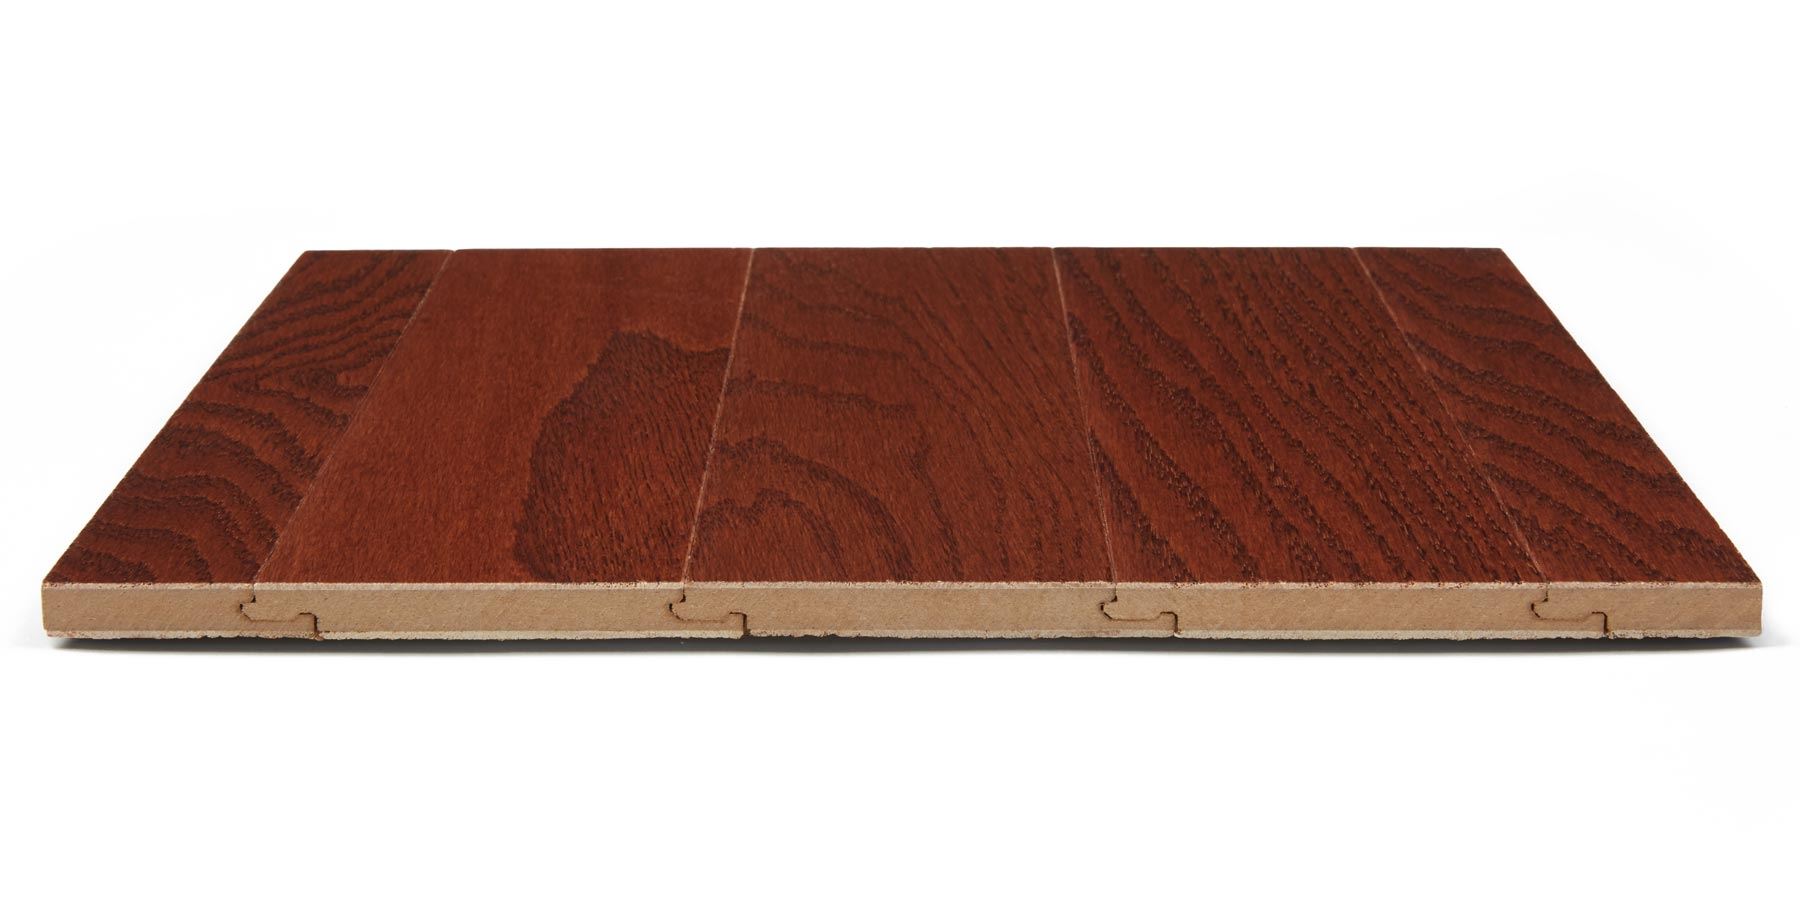 Accolade Engineered Hardwood Flooring